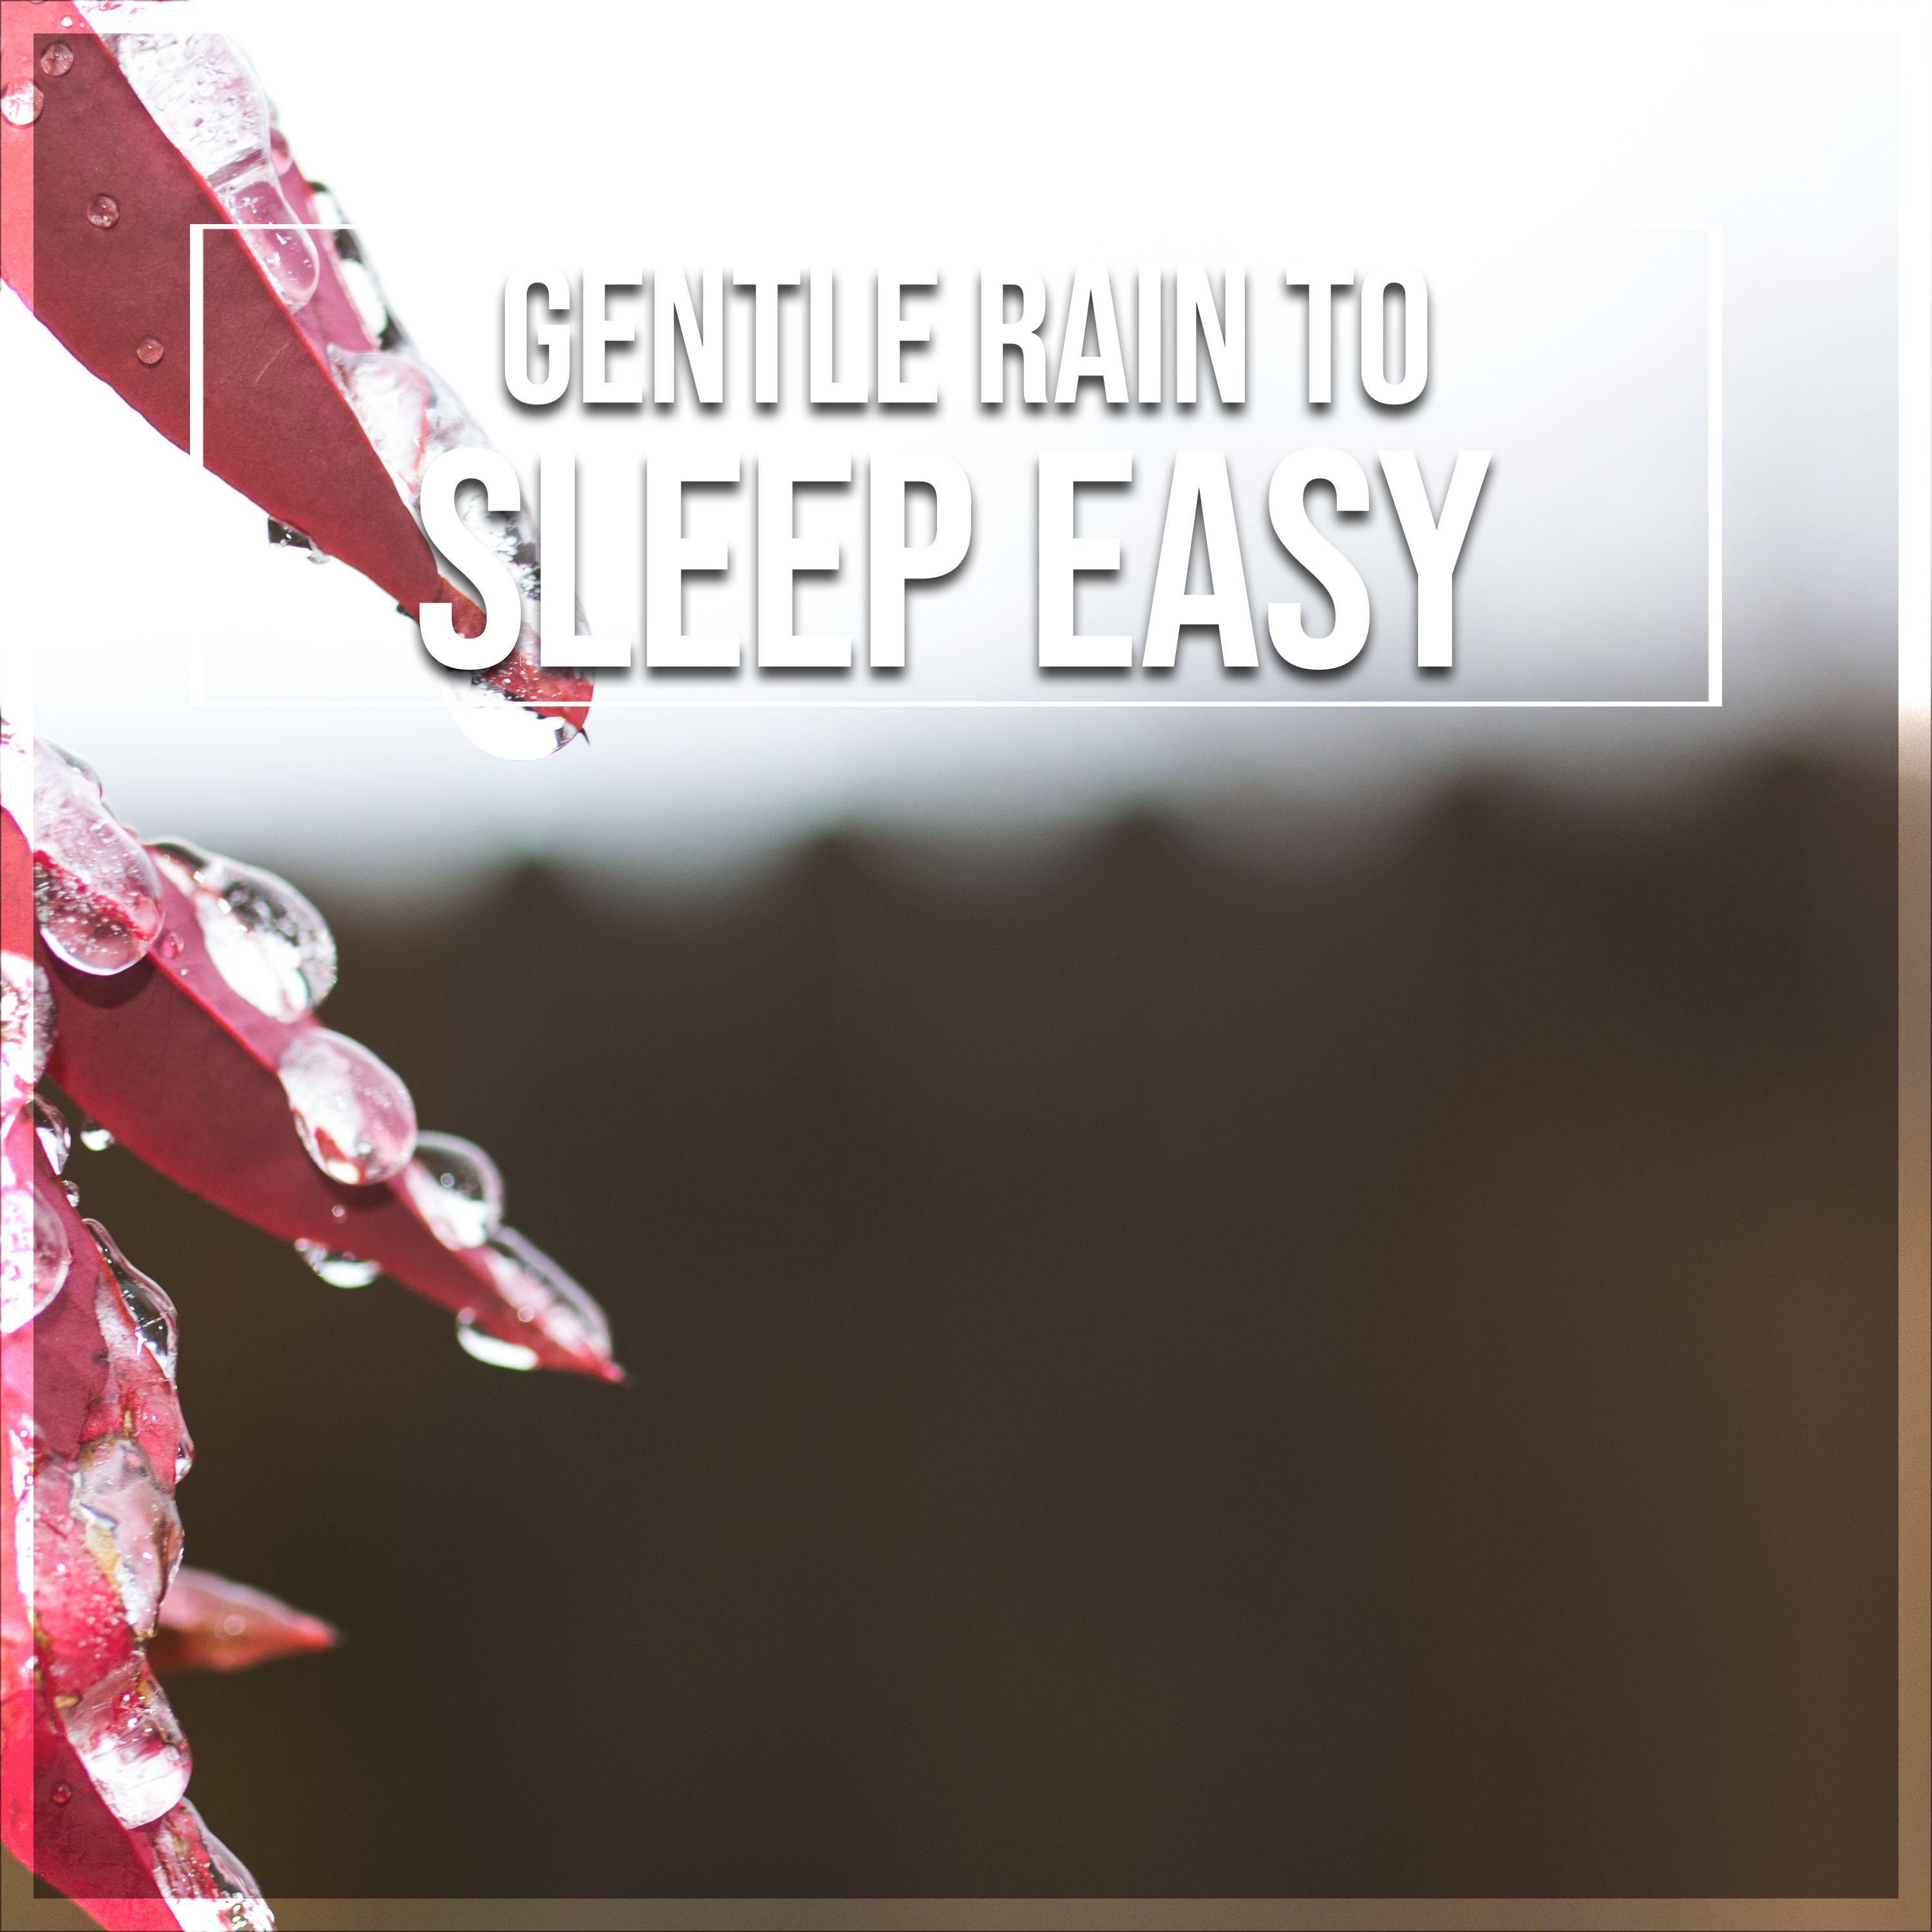 12 Gentle Rain Storms to Sleep Easy